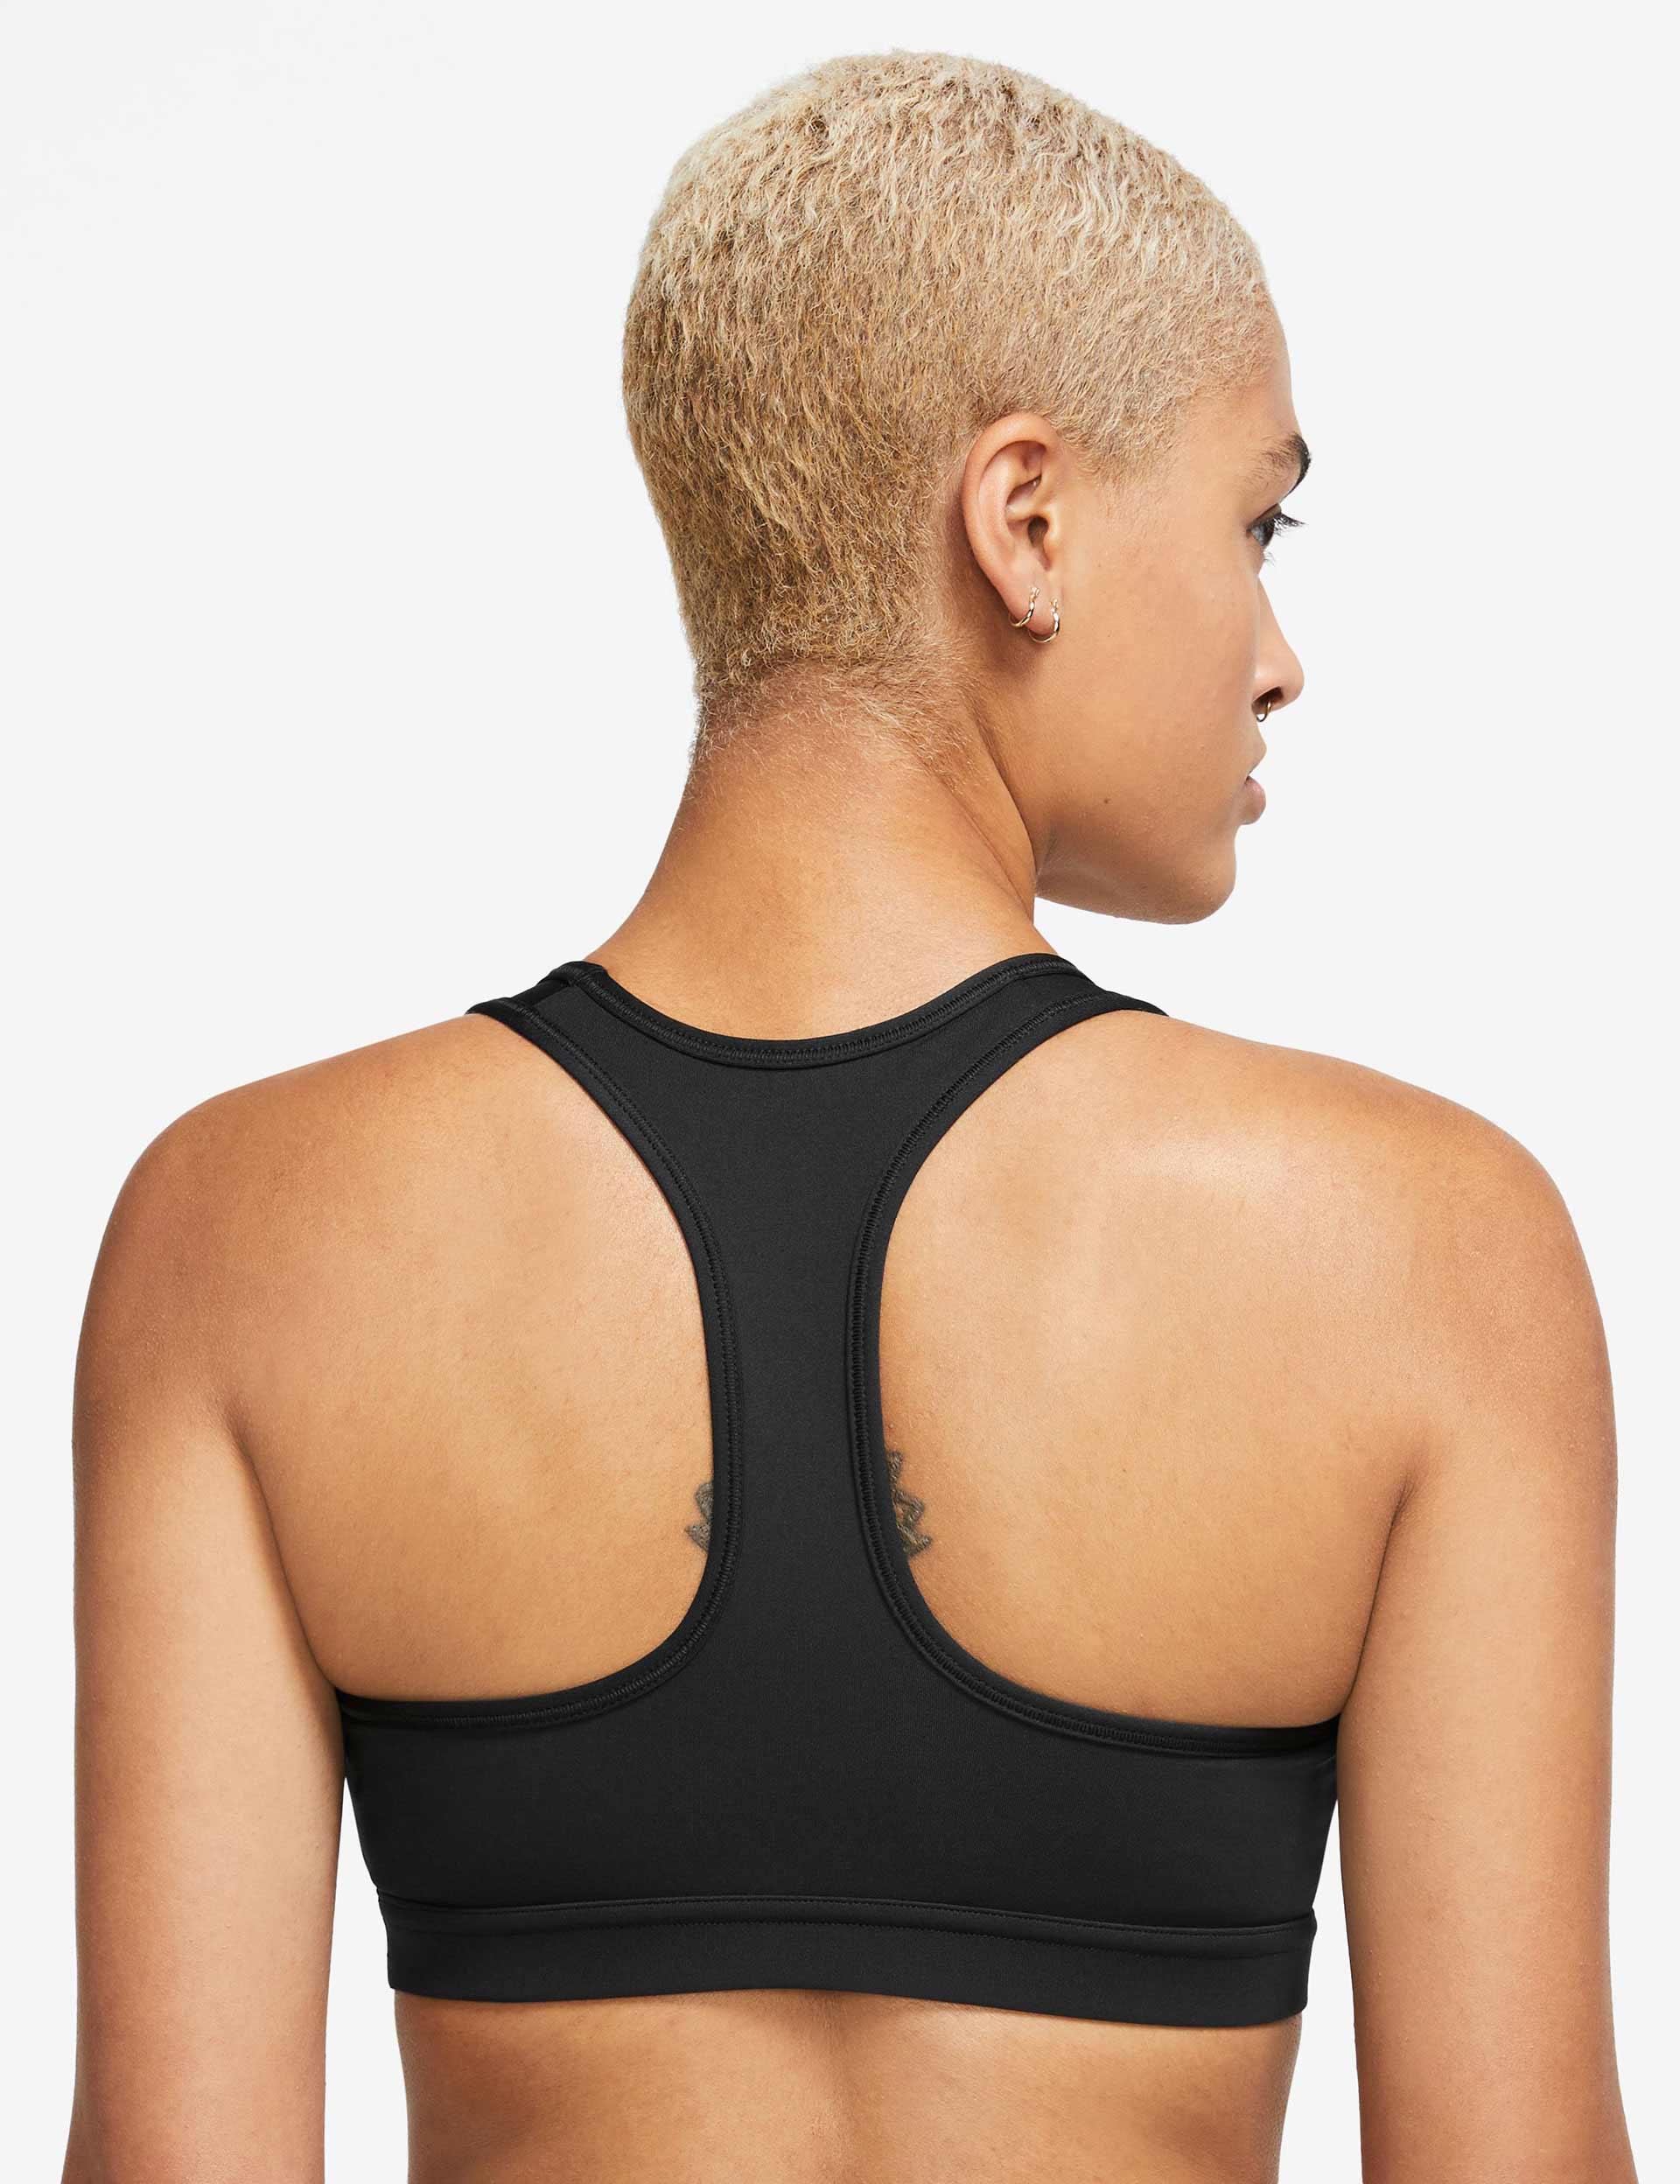 Nike Women's Medium Support Black and White Sports Bra Size Small